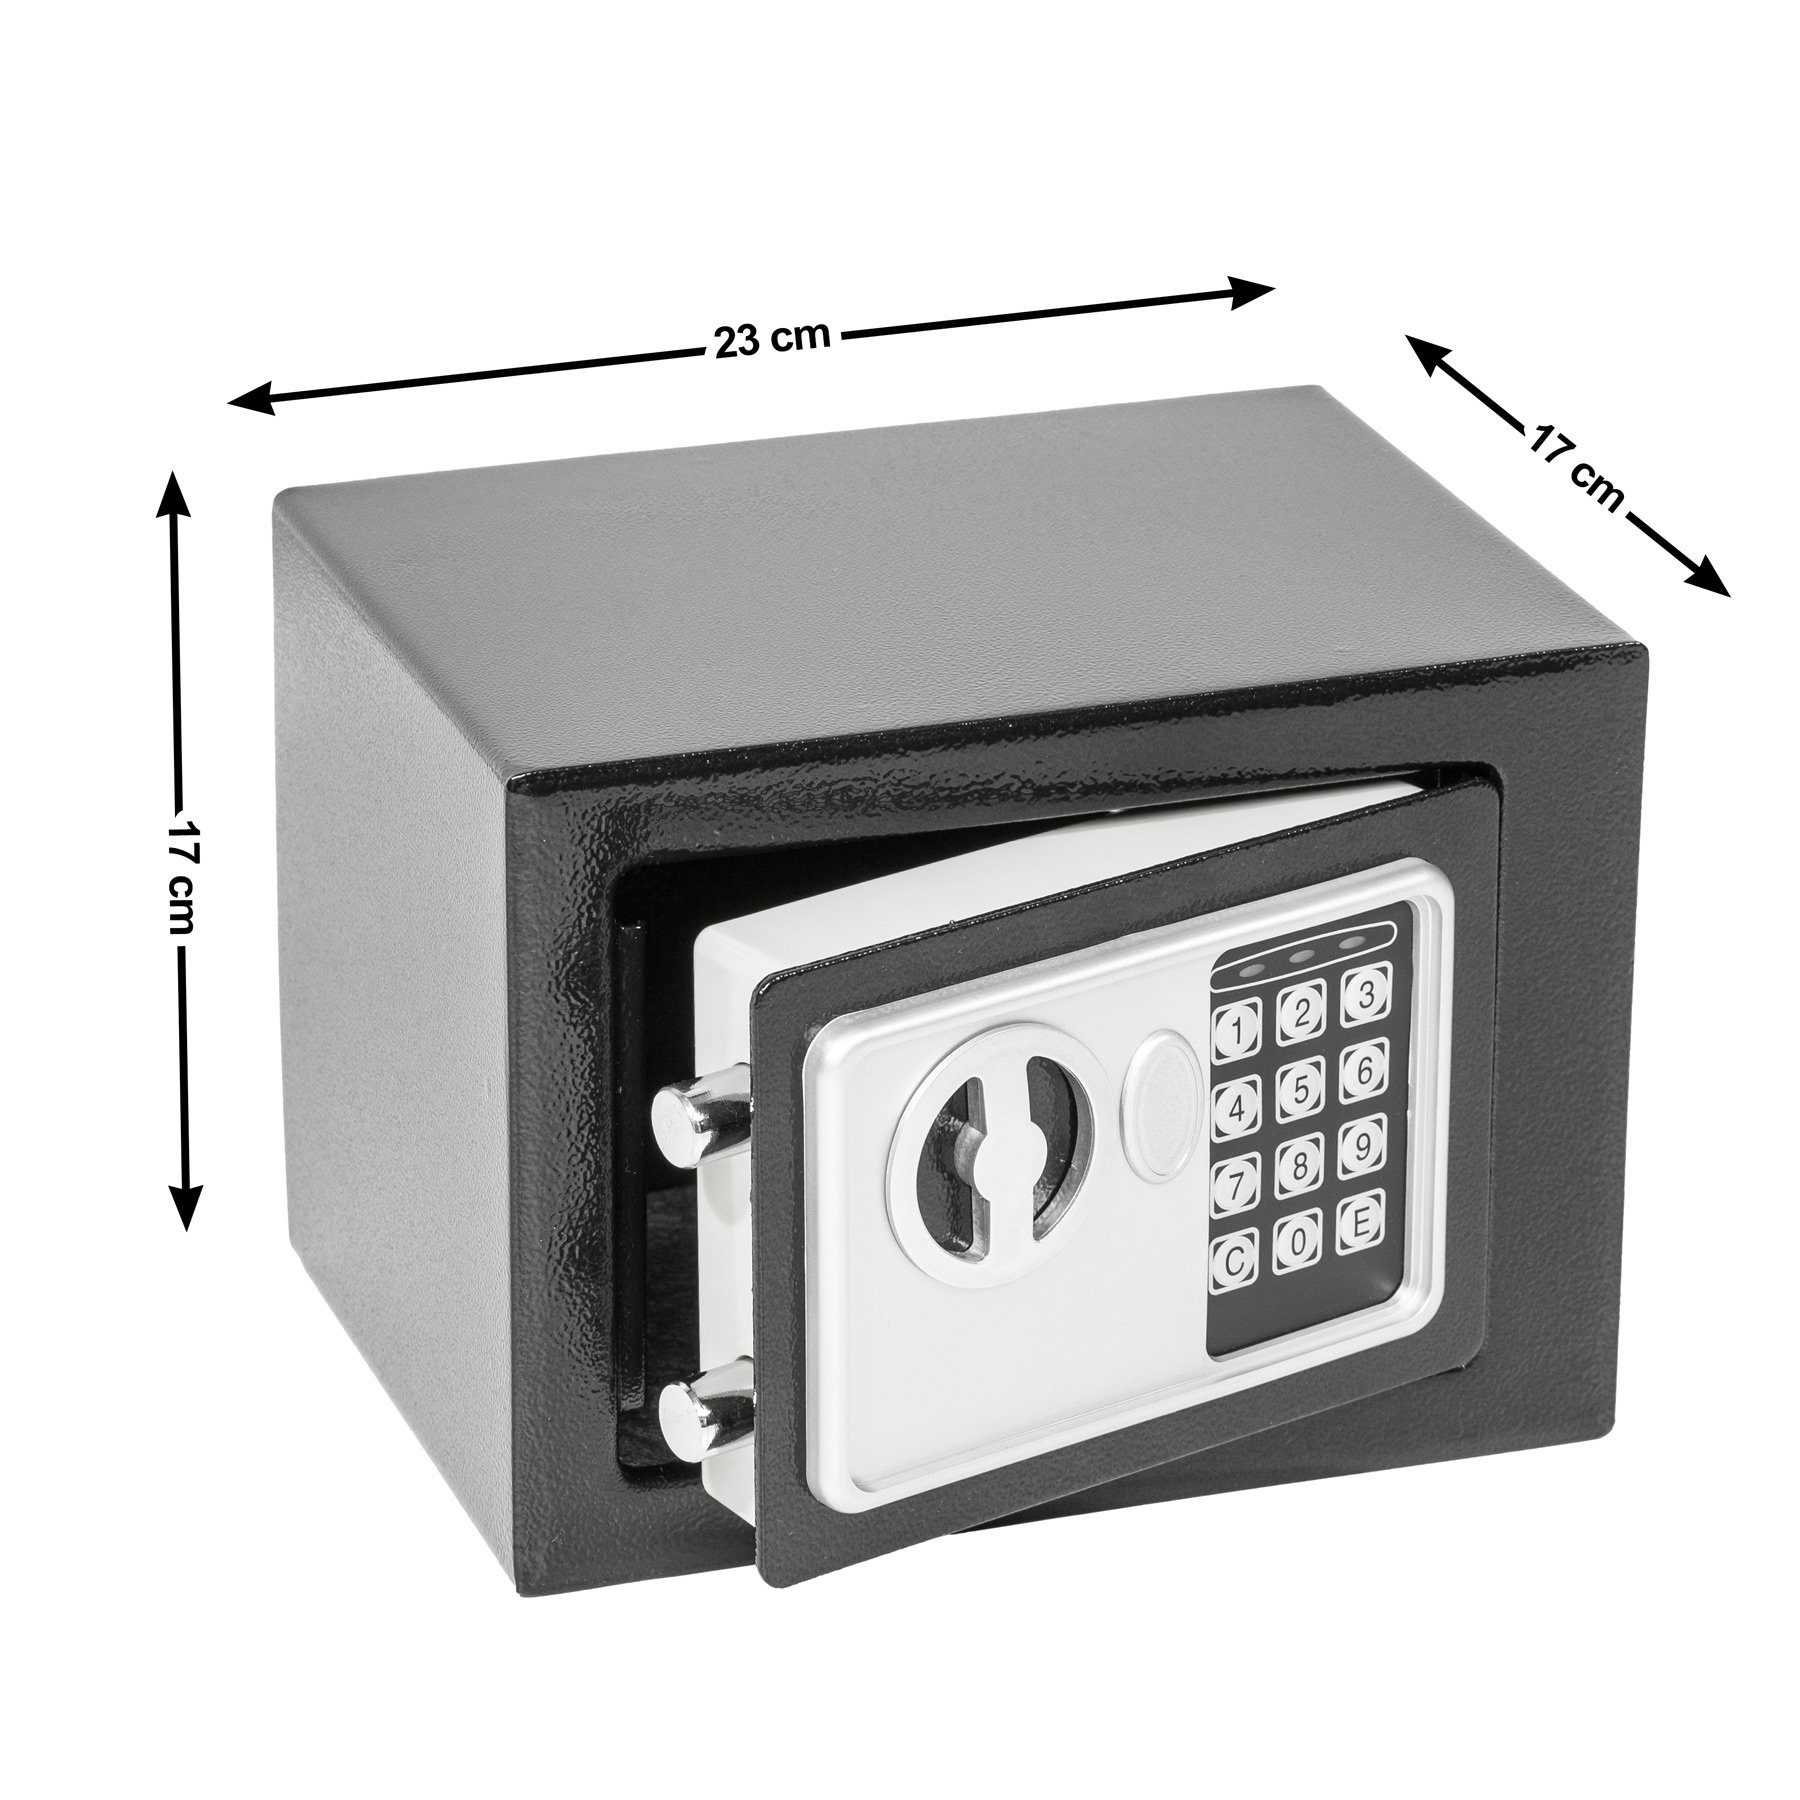 inkl., Tresor Schlüssel tectake mit Elektronischer Safe Tresor abschließbar